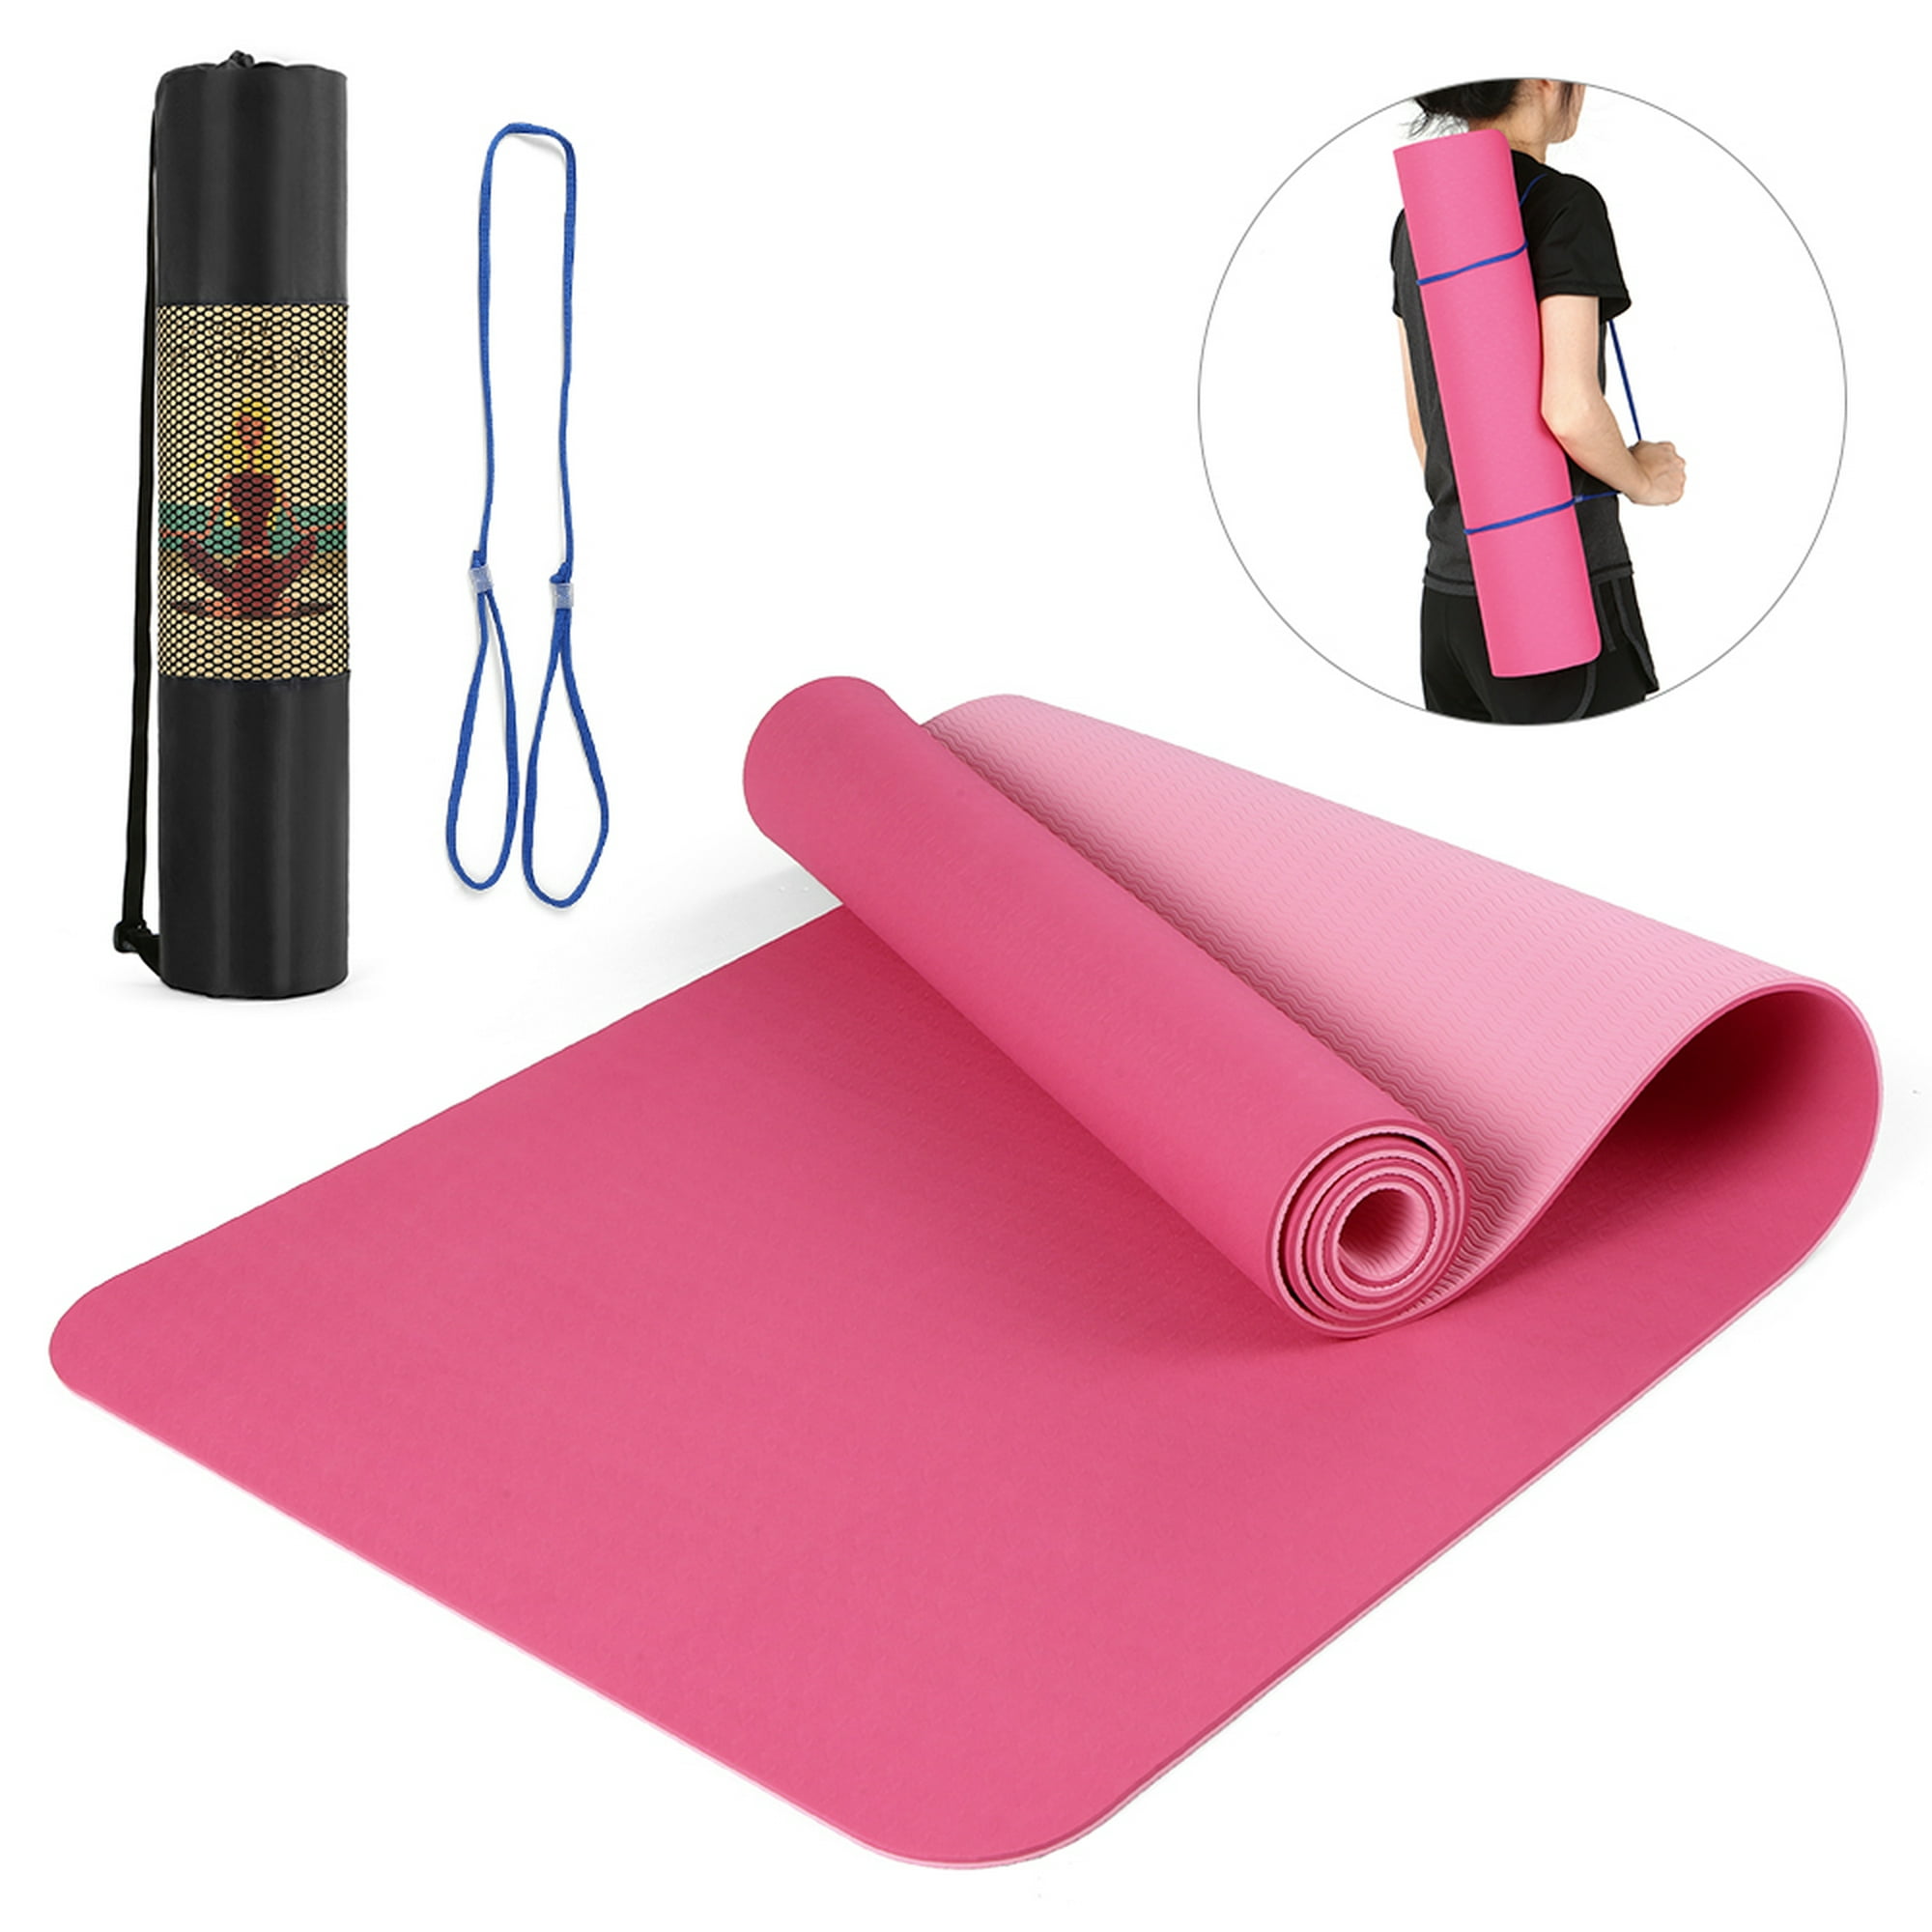 Esterilla de yoga antideslizante plegable portátil, 70.8 x 26 pulgadas,  absorbente para ejercicio, fitness, pilates, gimnasia, playa, viajes,  hermosa